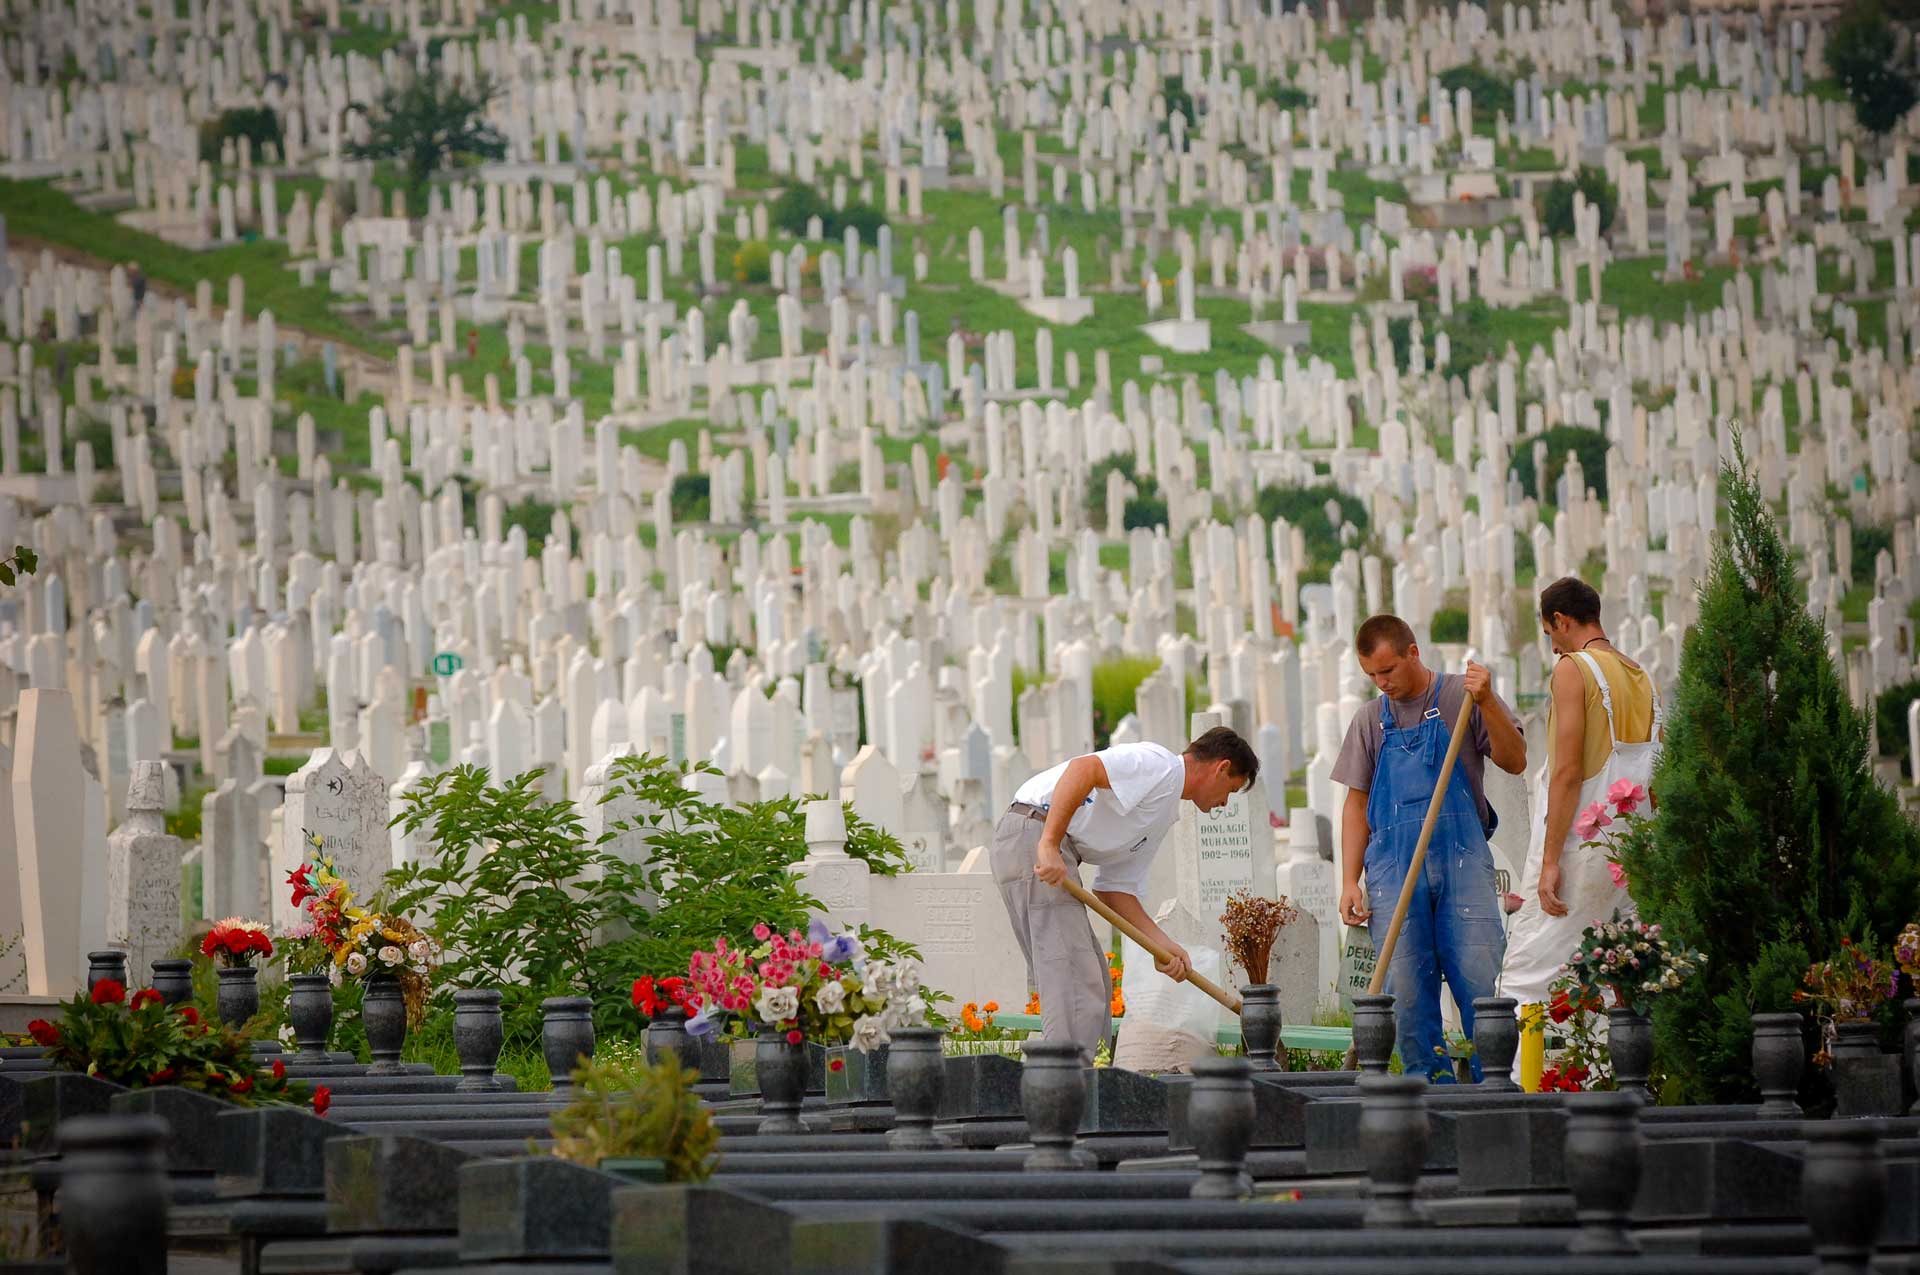 Friedhof von Sarajevo, Bosnien-Herzegowina, September 2005